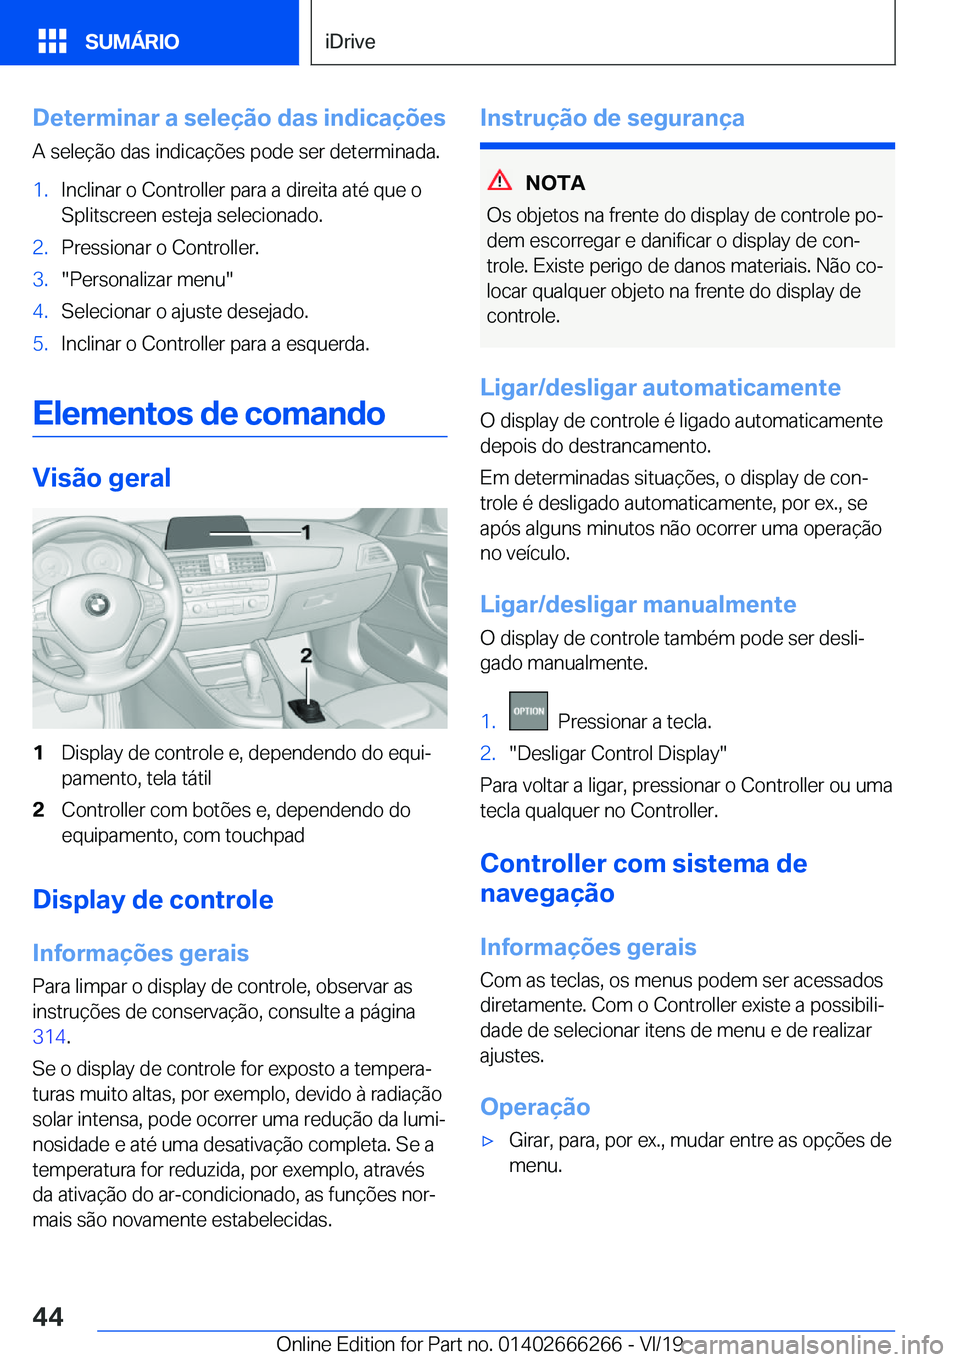 BMW 2 SERIES COUPE 2020  Manual do condutor (in Portuguese) �D�e�t�e�r�m�i�n�a�r��a��s�e�l�e�